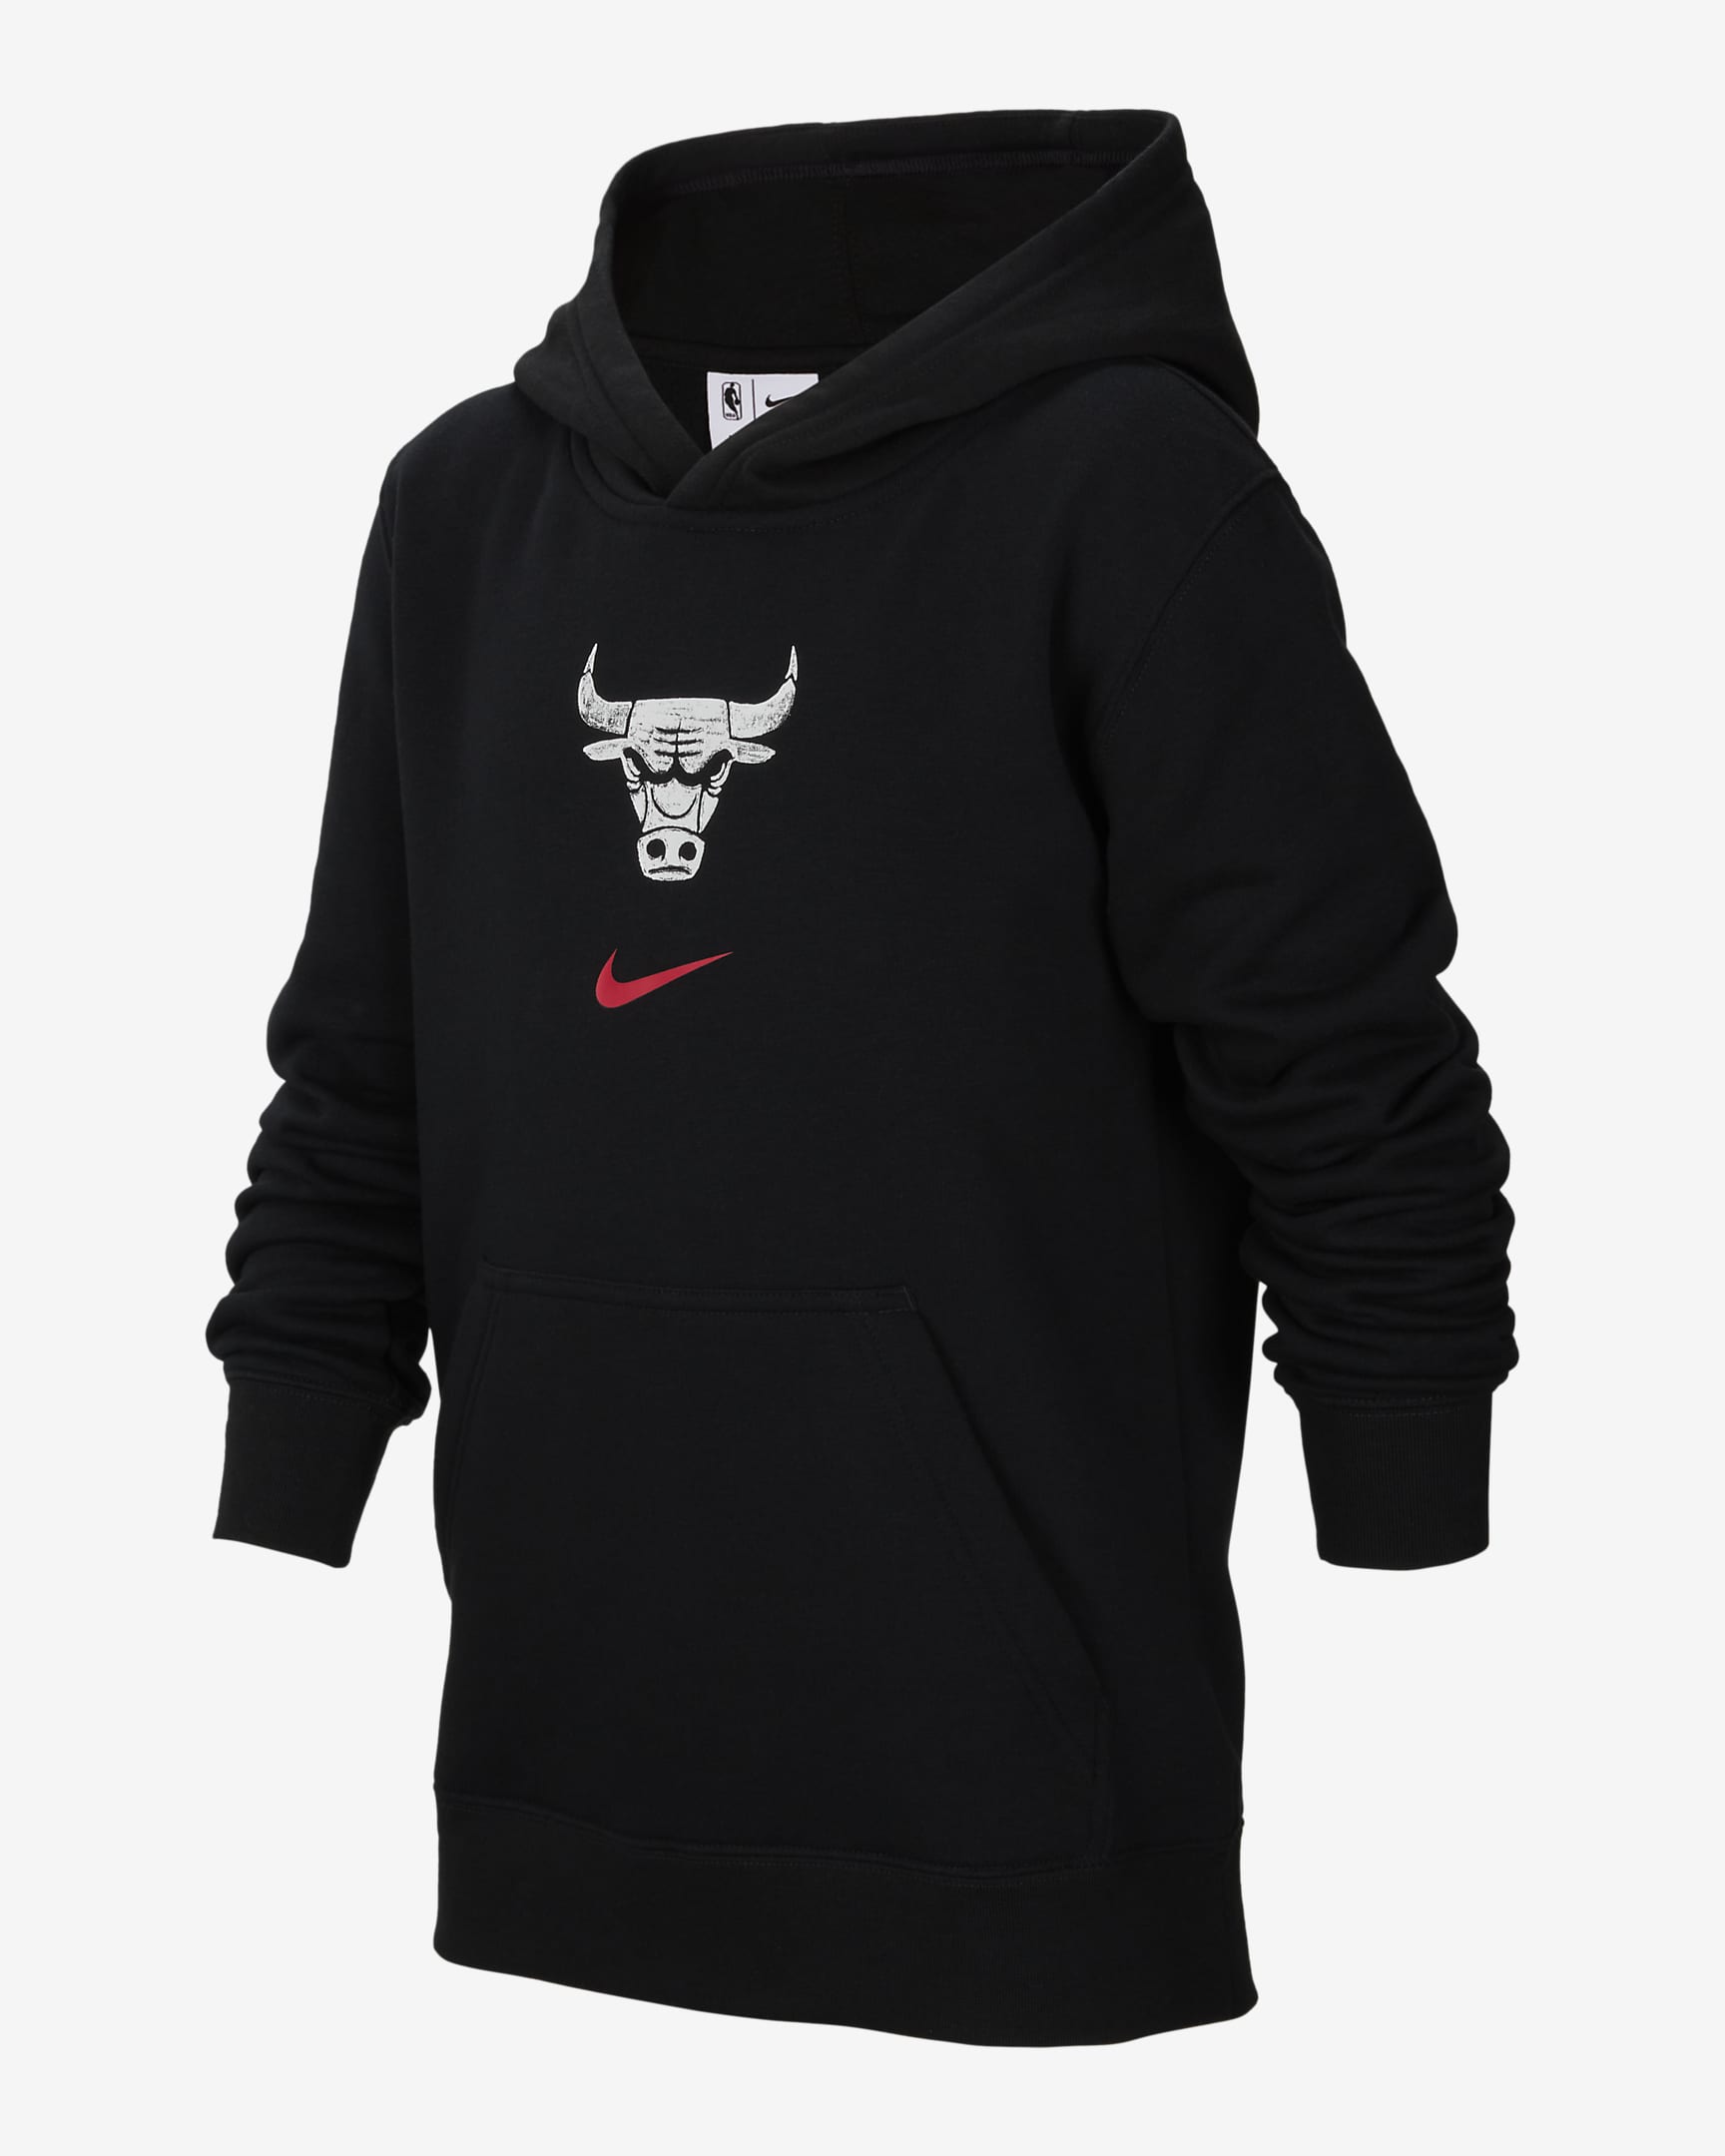 Chicago Bulls Club City Edition Older Kids' (Boys') Nike NBA Pullover Hoodie - Black